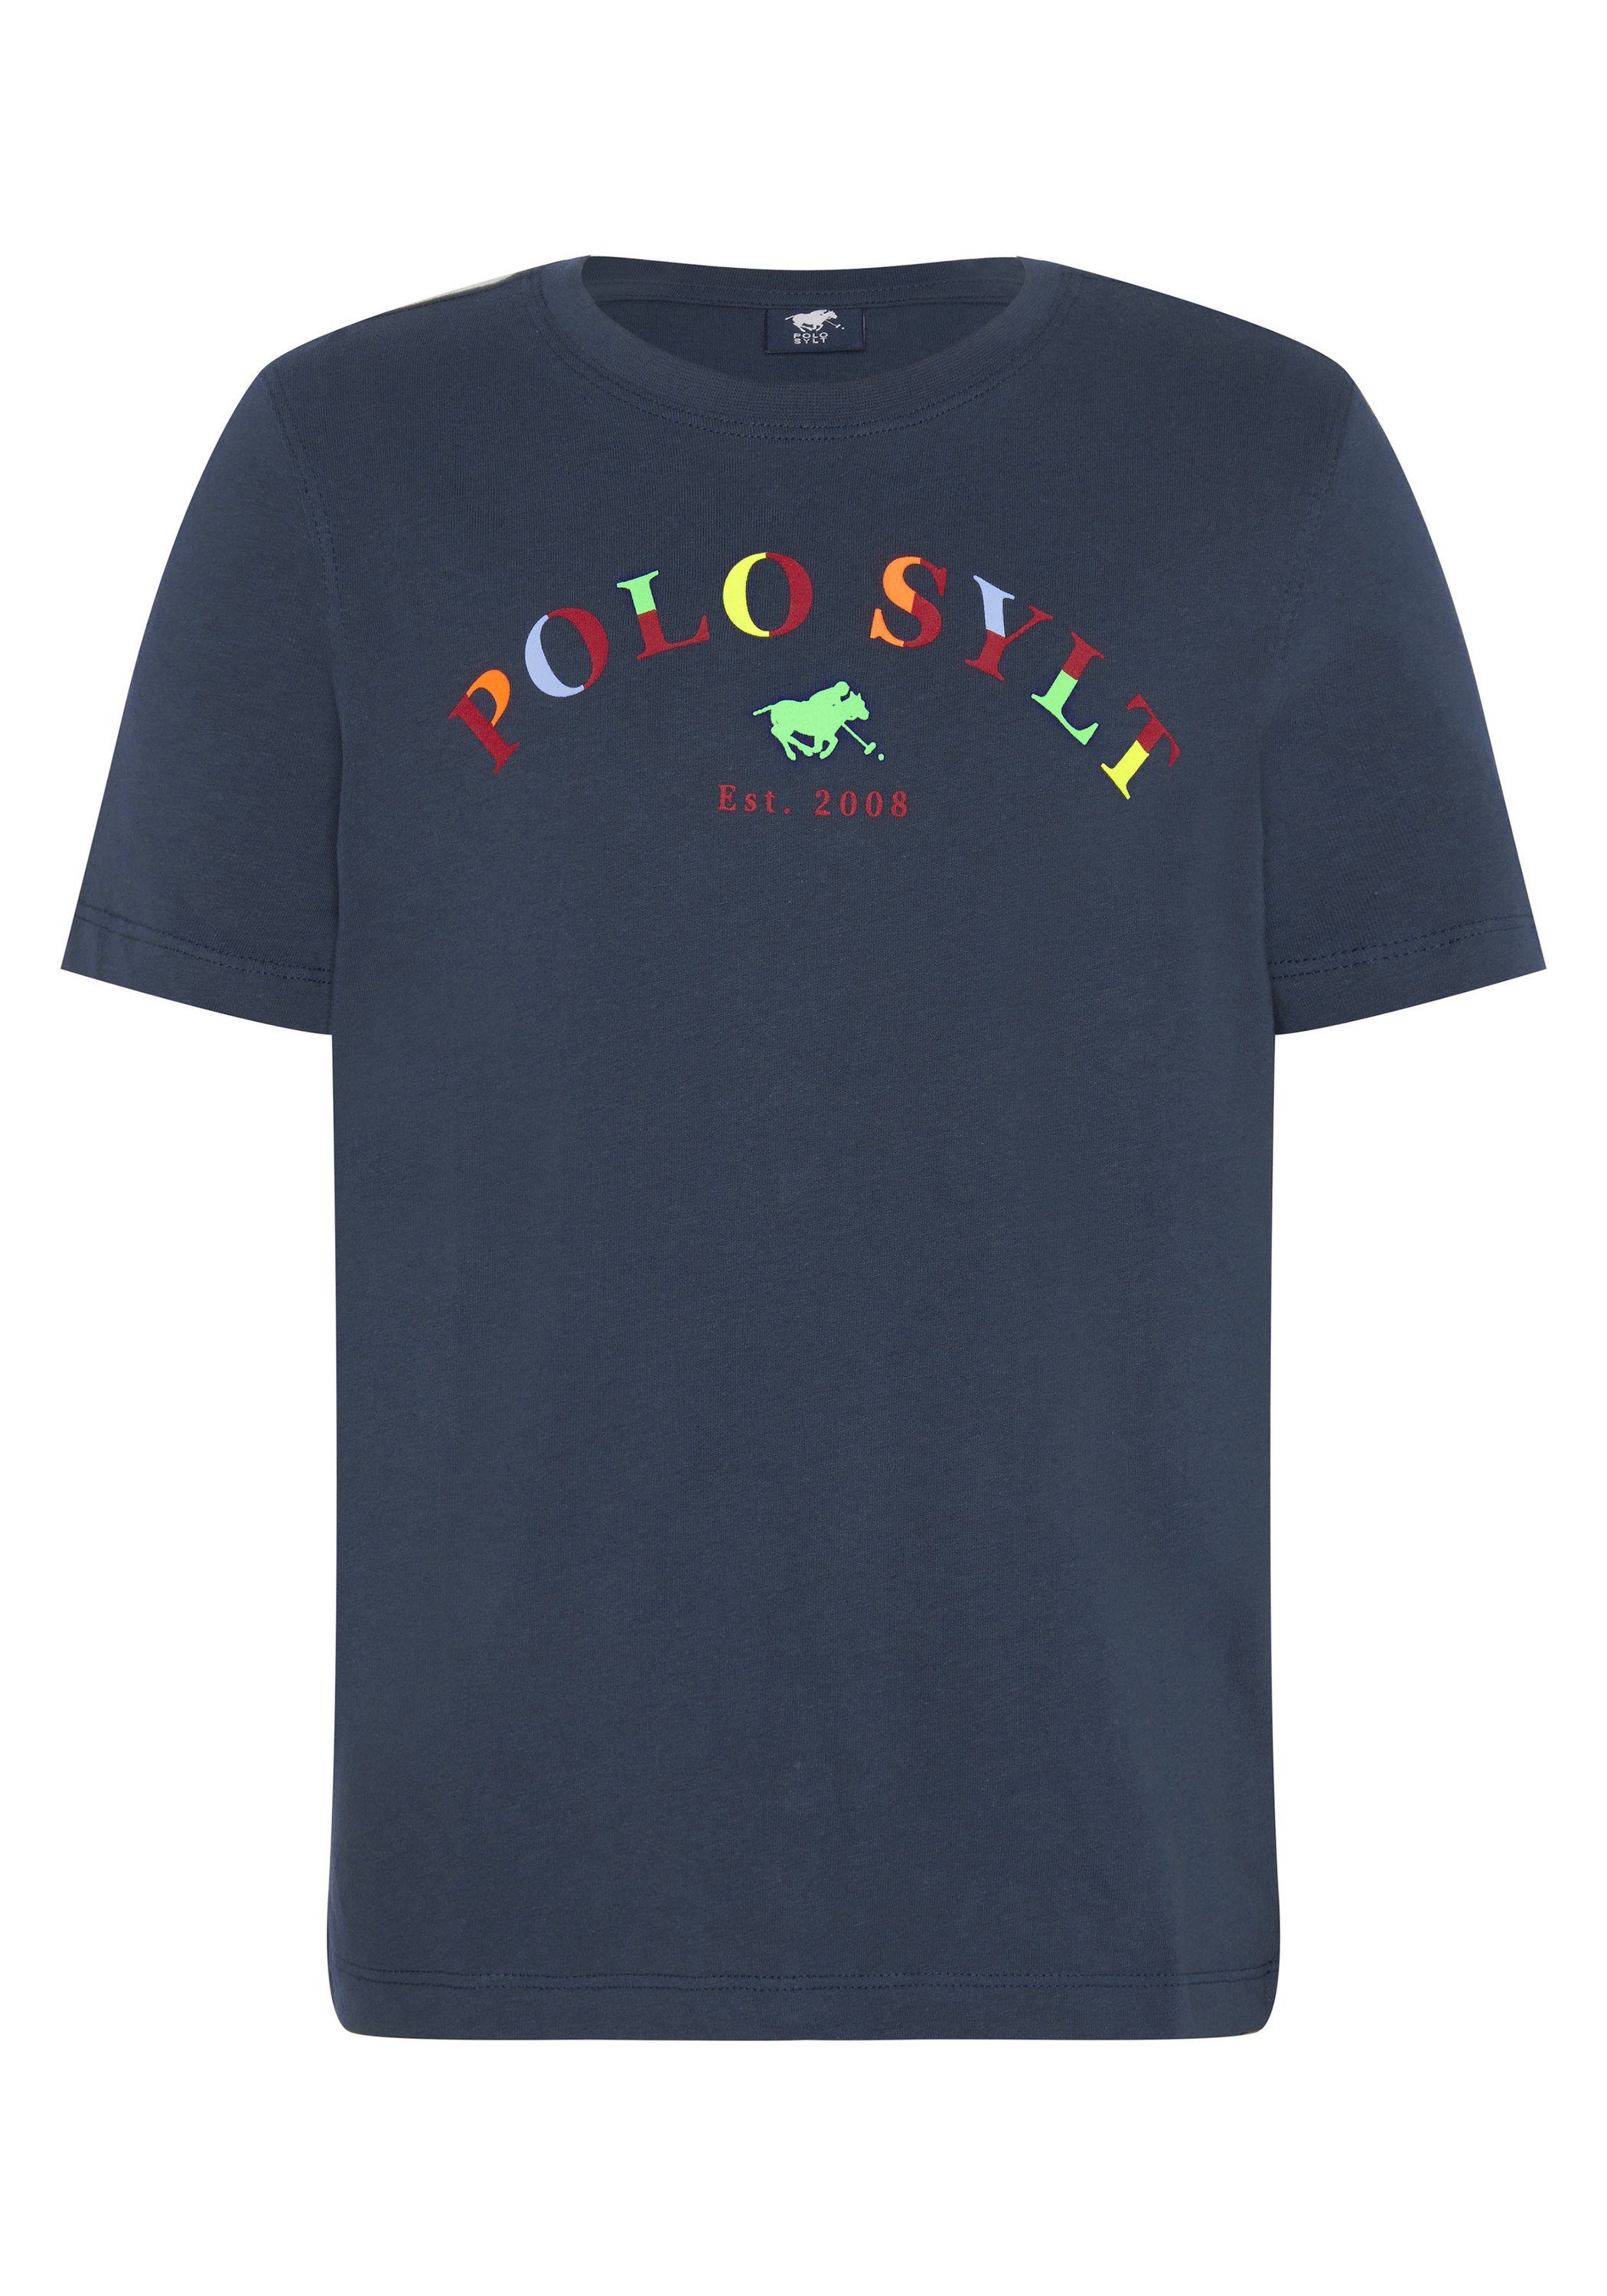 Polo farbenfrohem Print-Shirt mit Logoprint Eclipse Total Sylt 19-4010